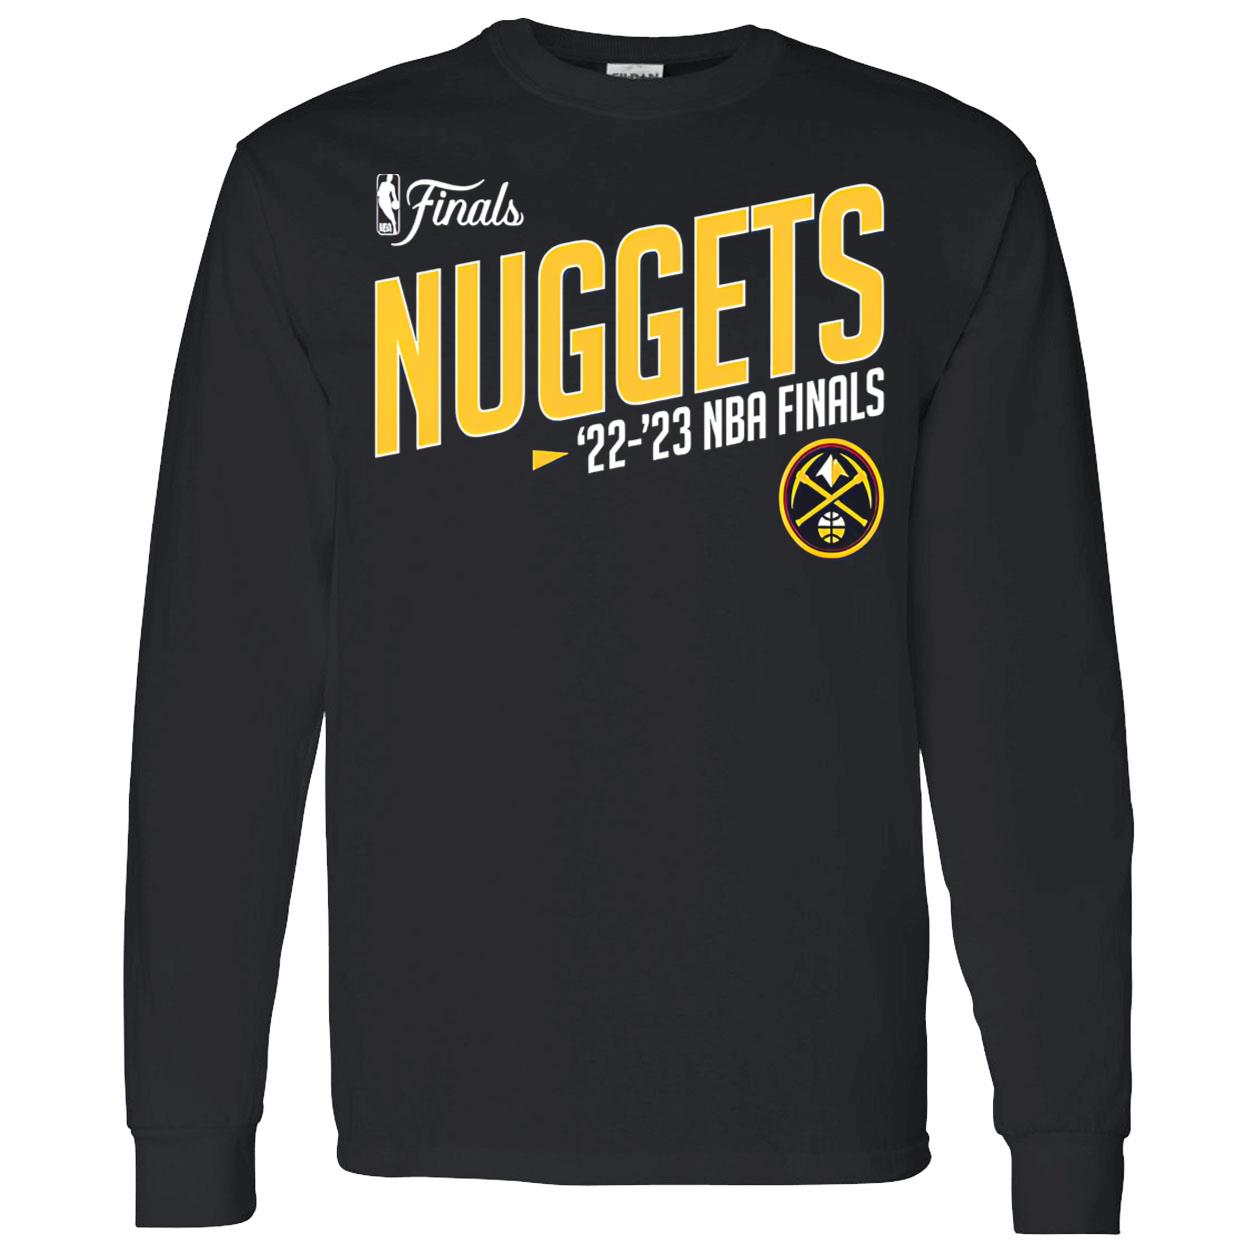 Nuggets Finals Shirt